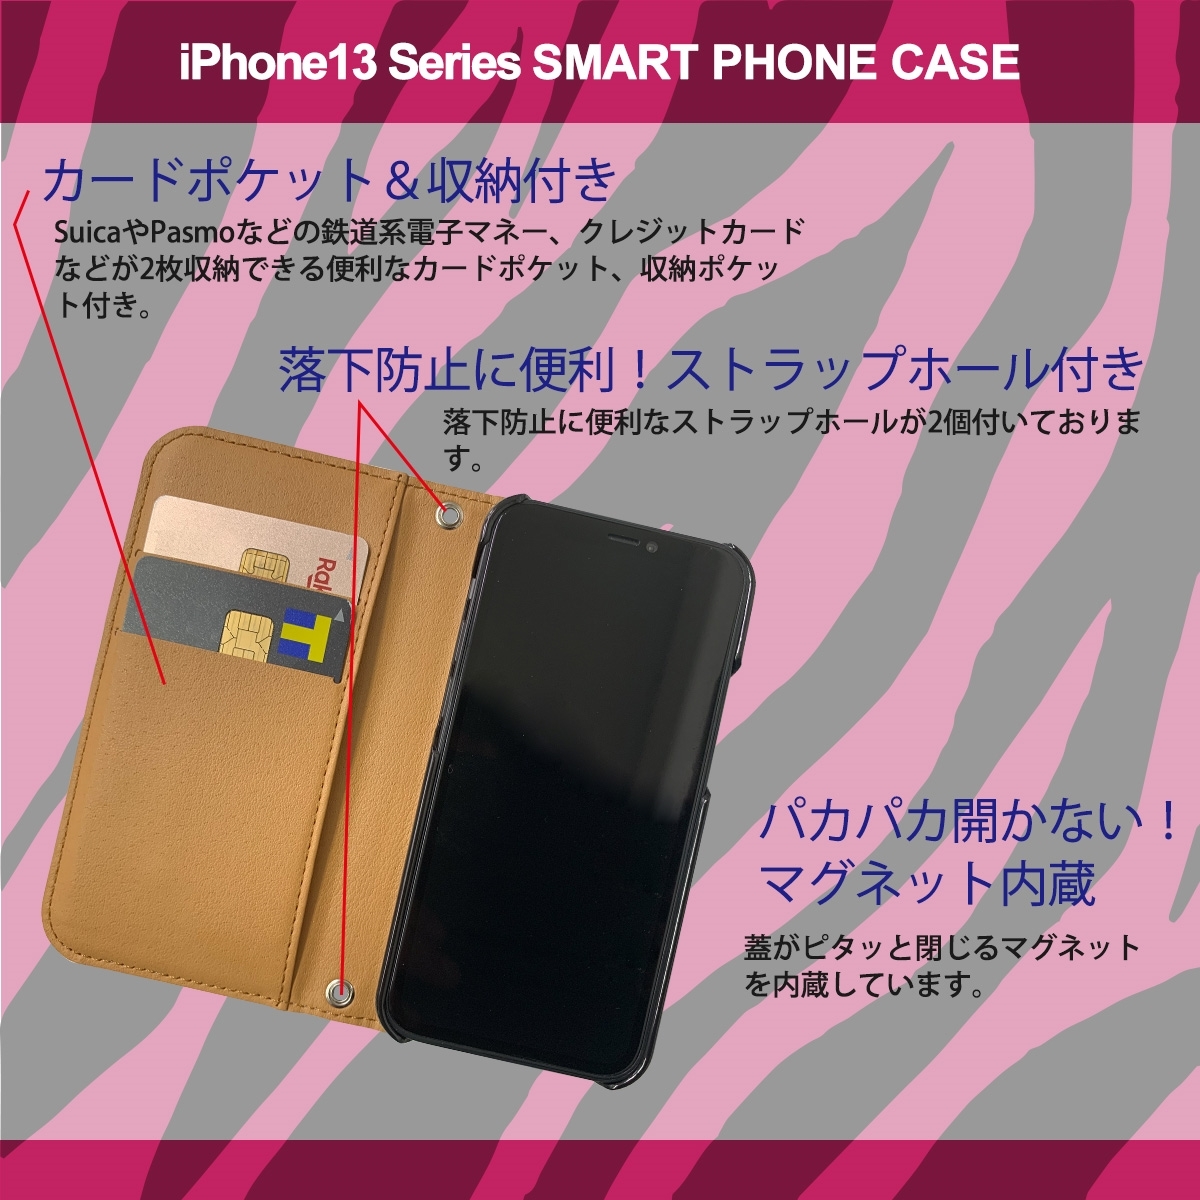 1】 iPhone13 Mini 手帳型 アイフォン ケース スマホカバー PVC レザー ゼブラ柄 ピンク